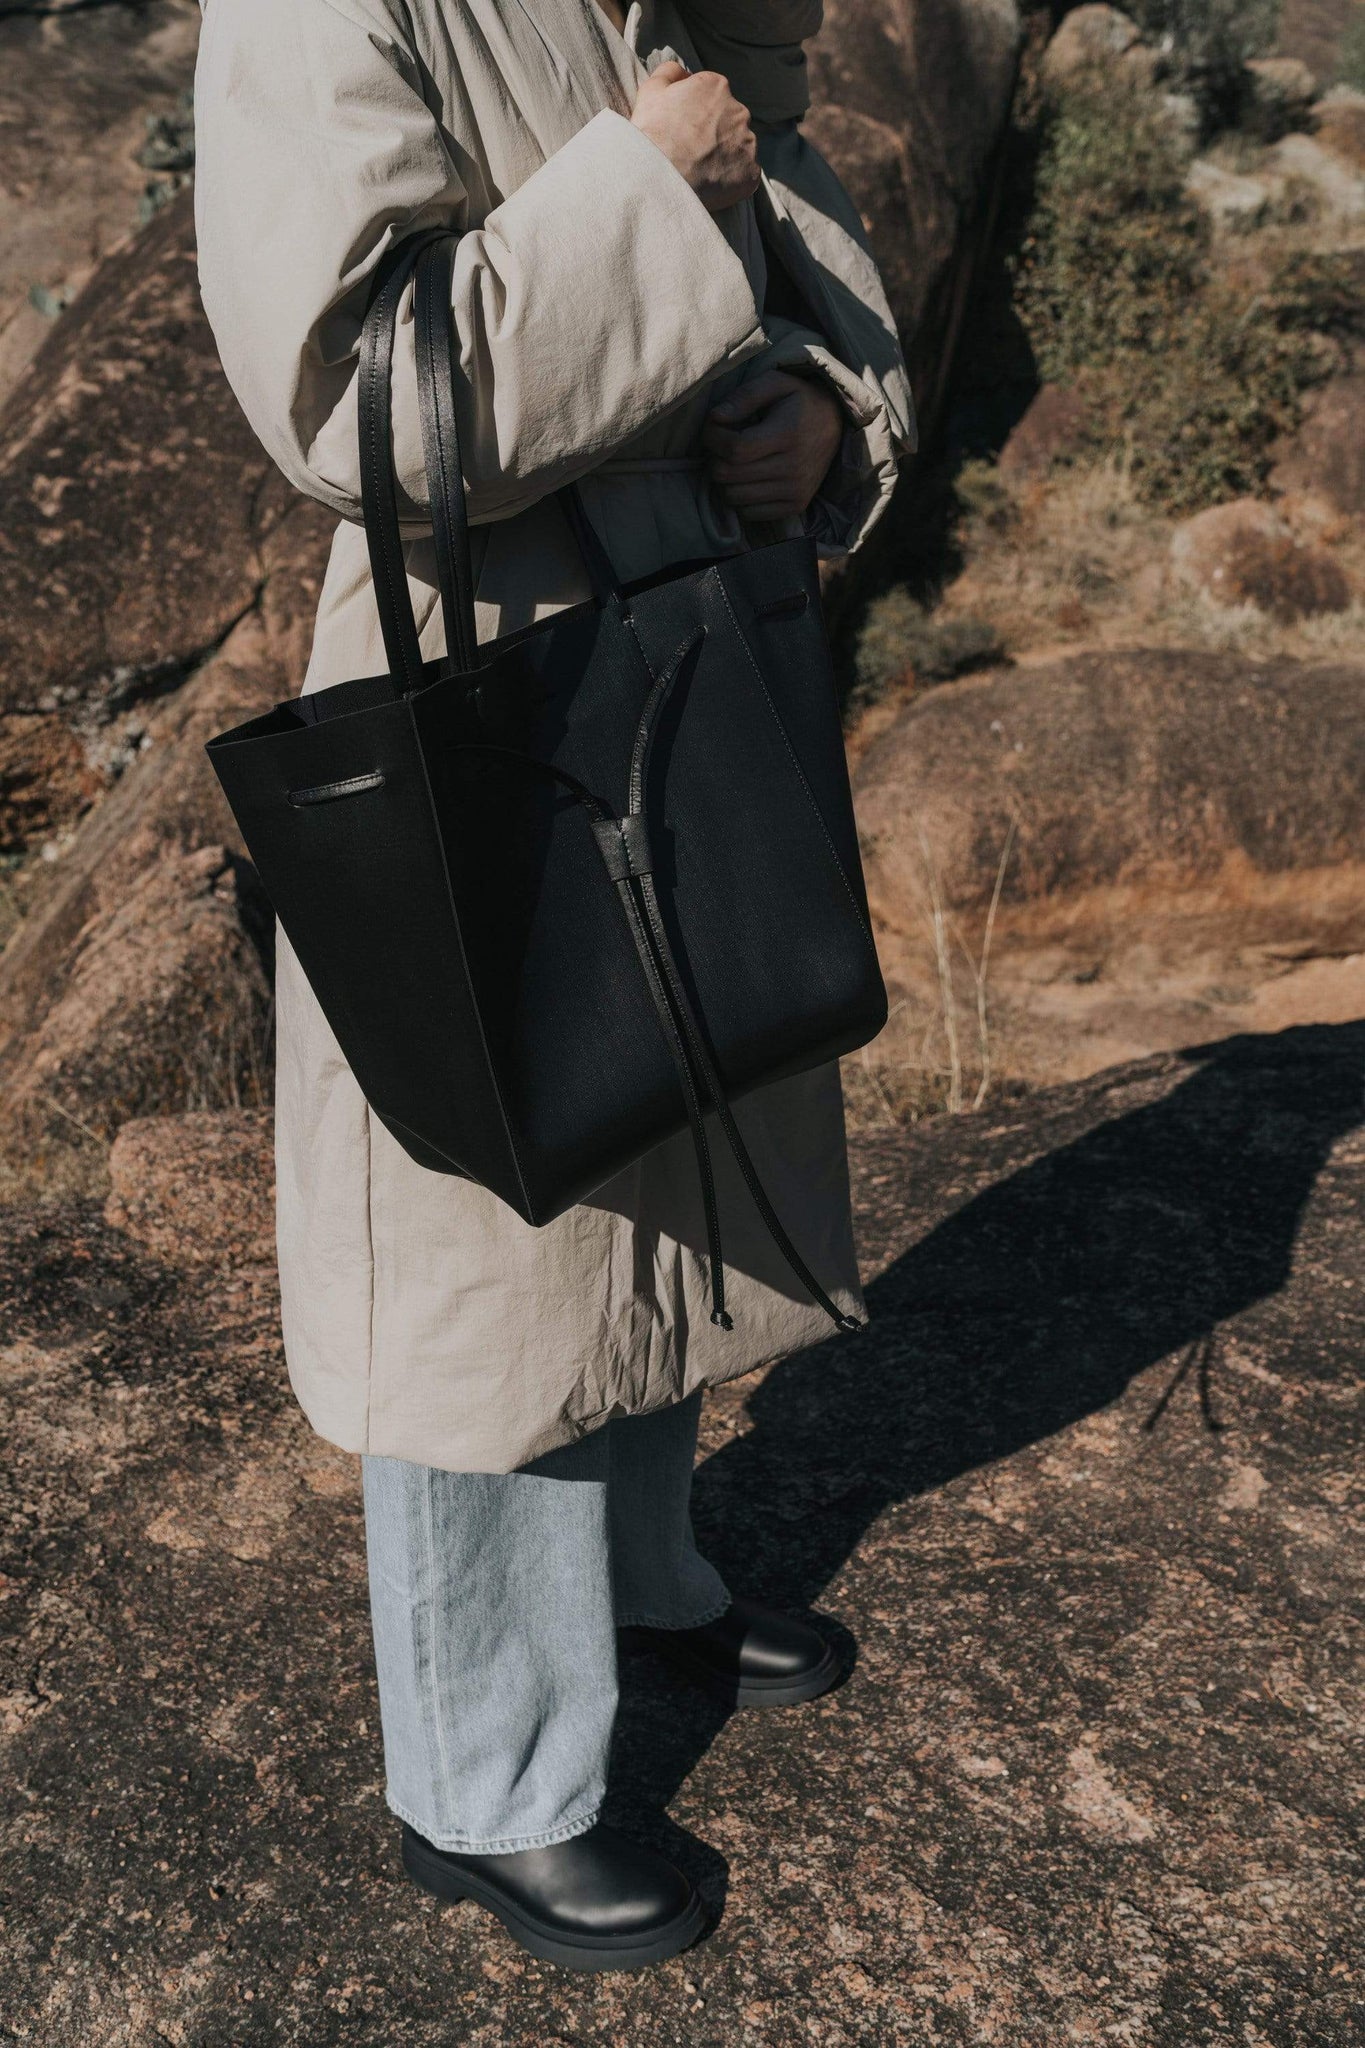 KWONN BAG Black Shopper vegan bags luxury bags handbags